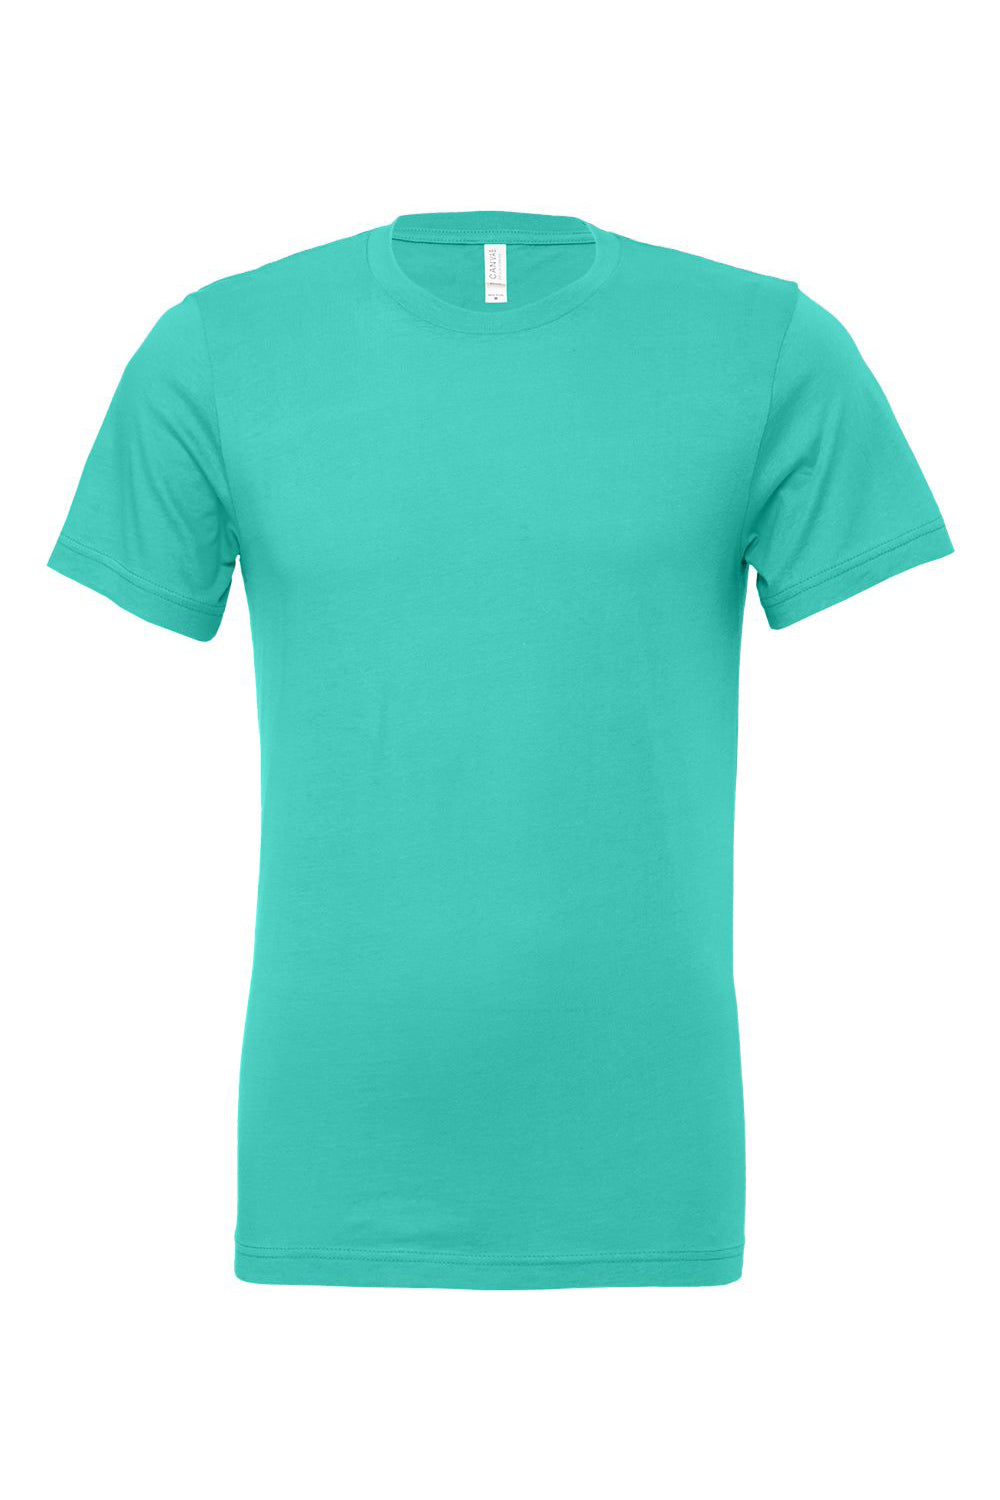 Bella + Canvas BC3001/3001C Mens Jersey Short Sleeve Crewneck T-Shirt Teal Green Flat Front